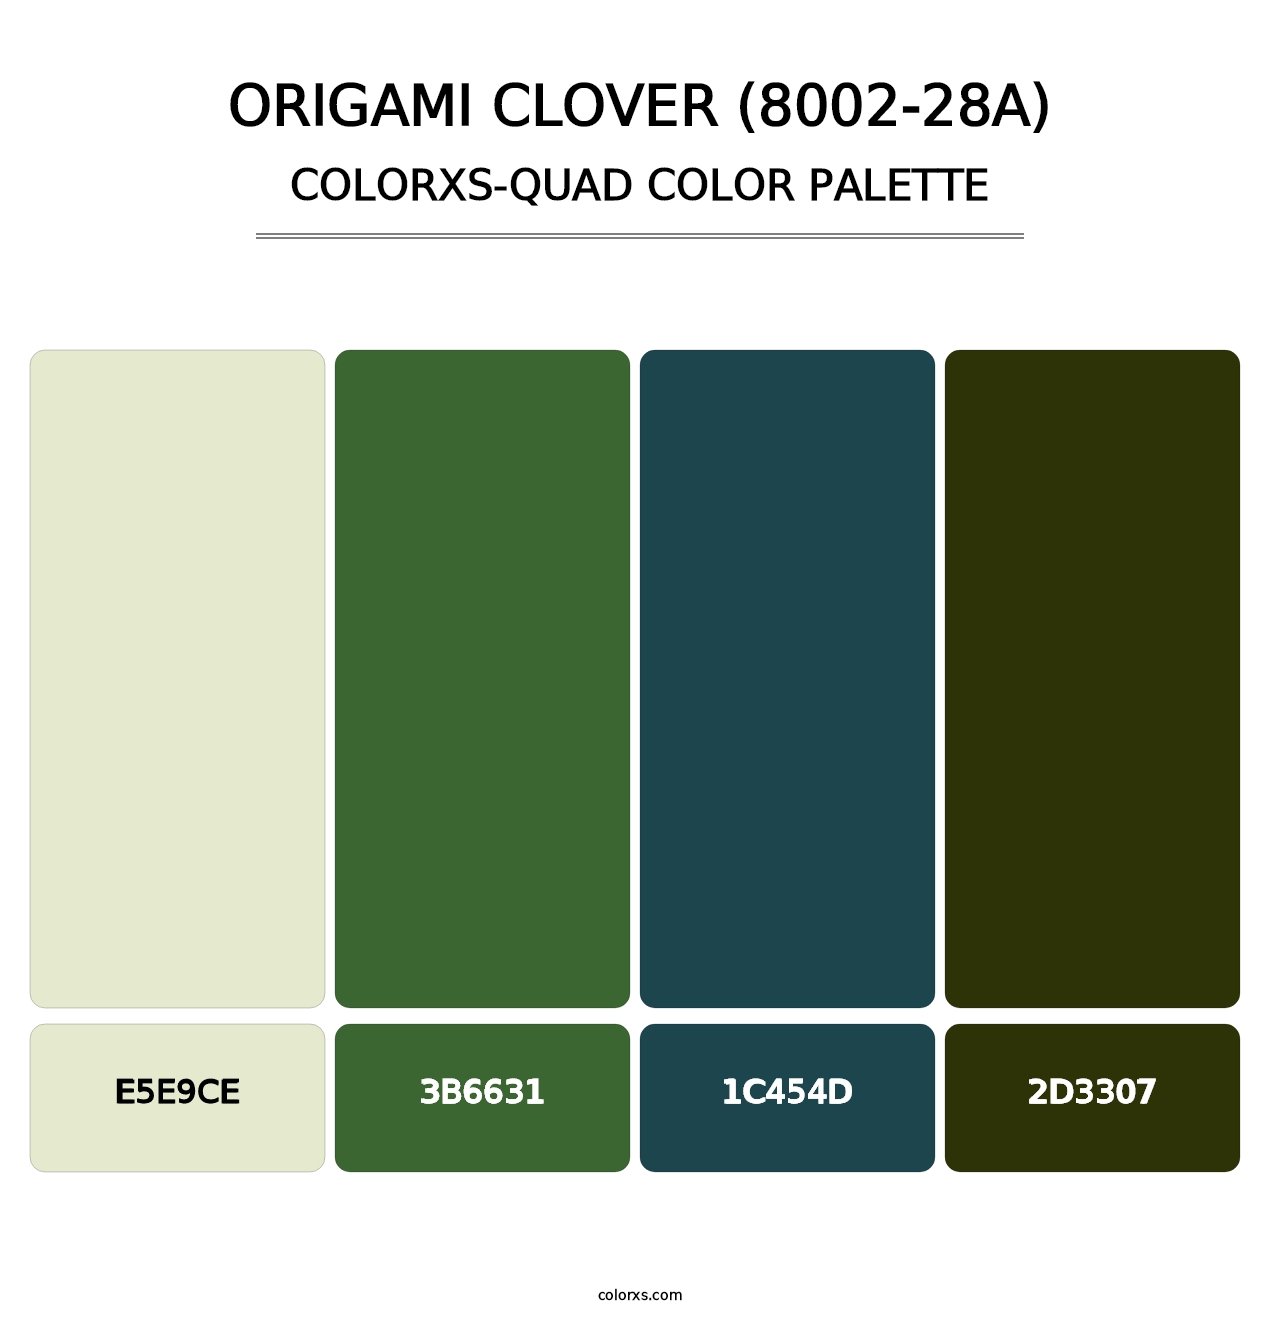 Origami Clover (8002-28A) - Colorxs Quad Palette